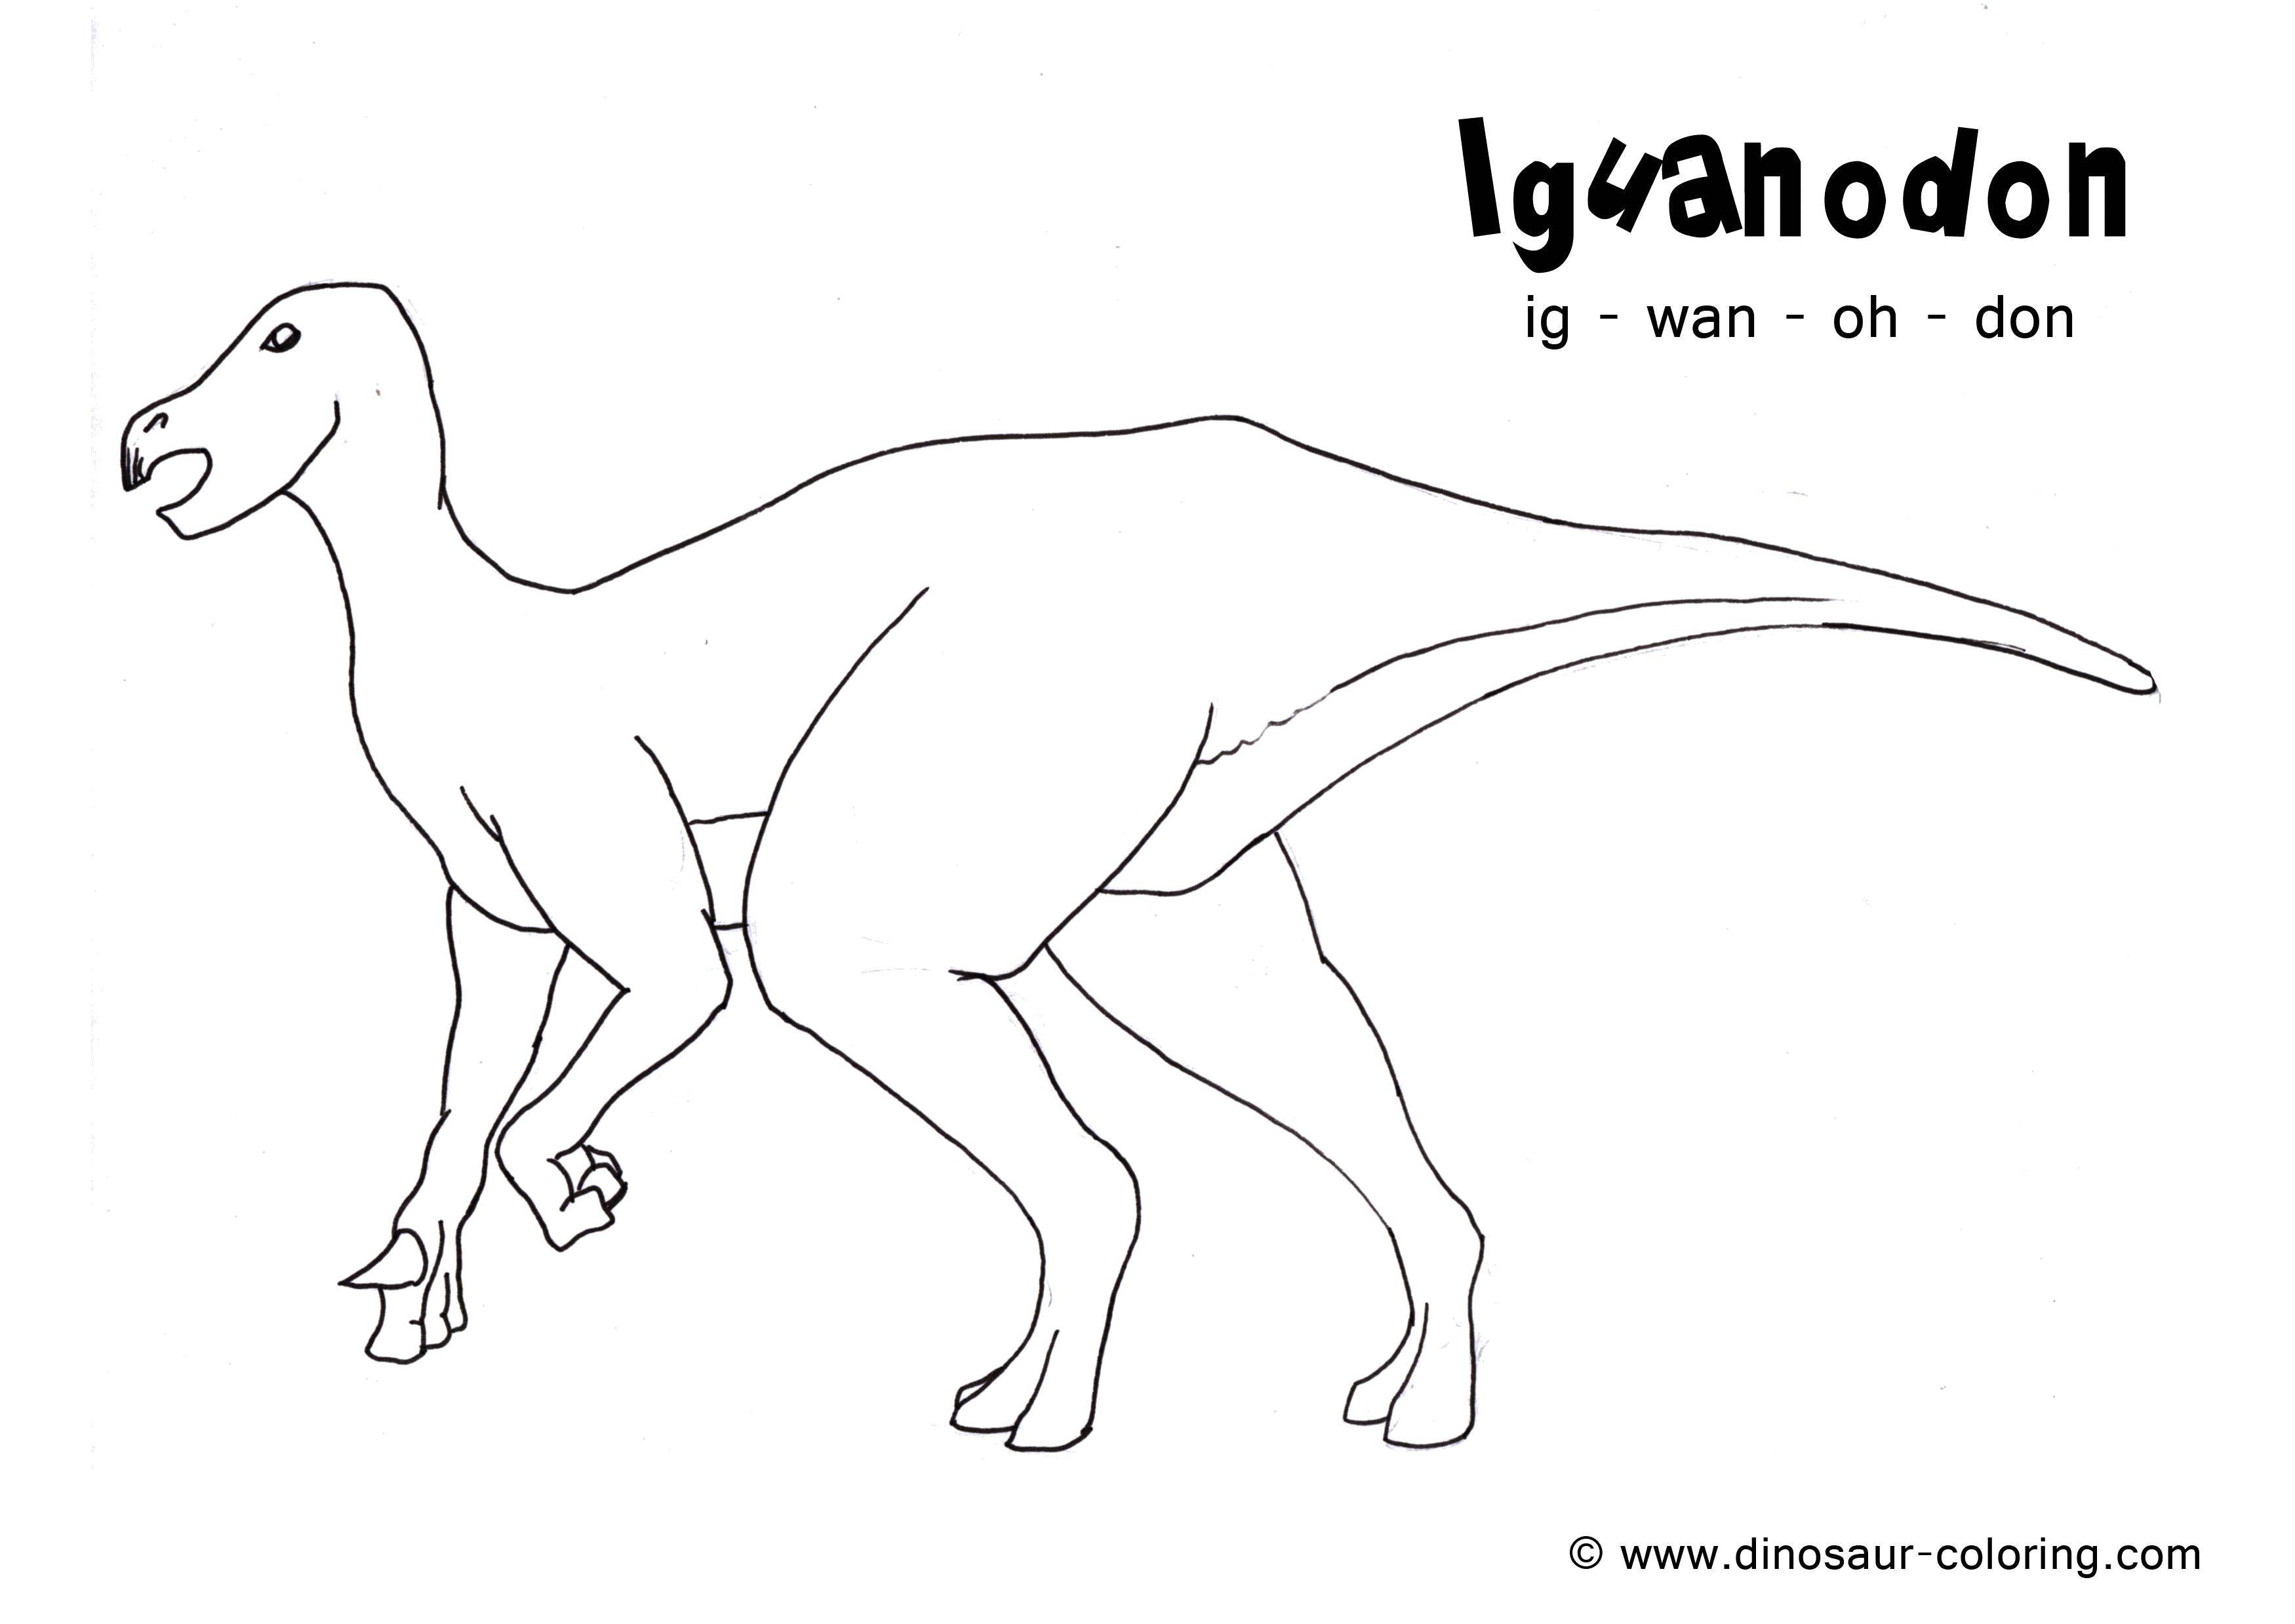 Coloring Iguanodon. Category dinosaur. Tags:  Dinosaurs.